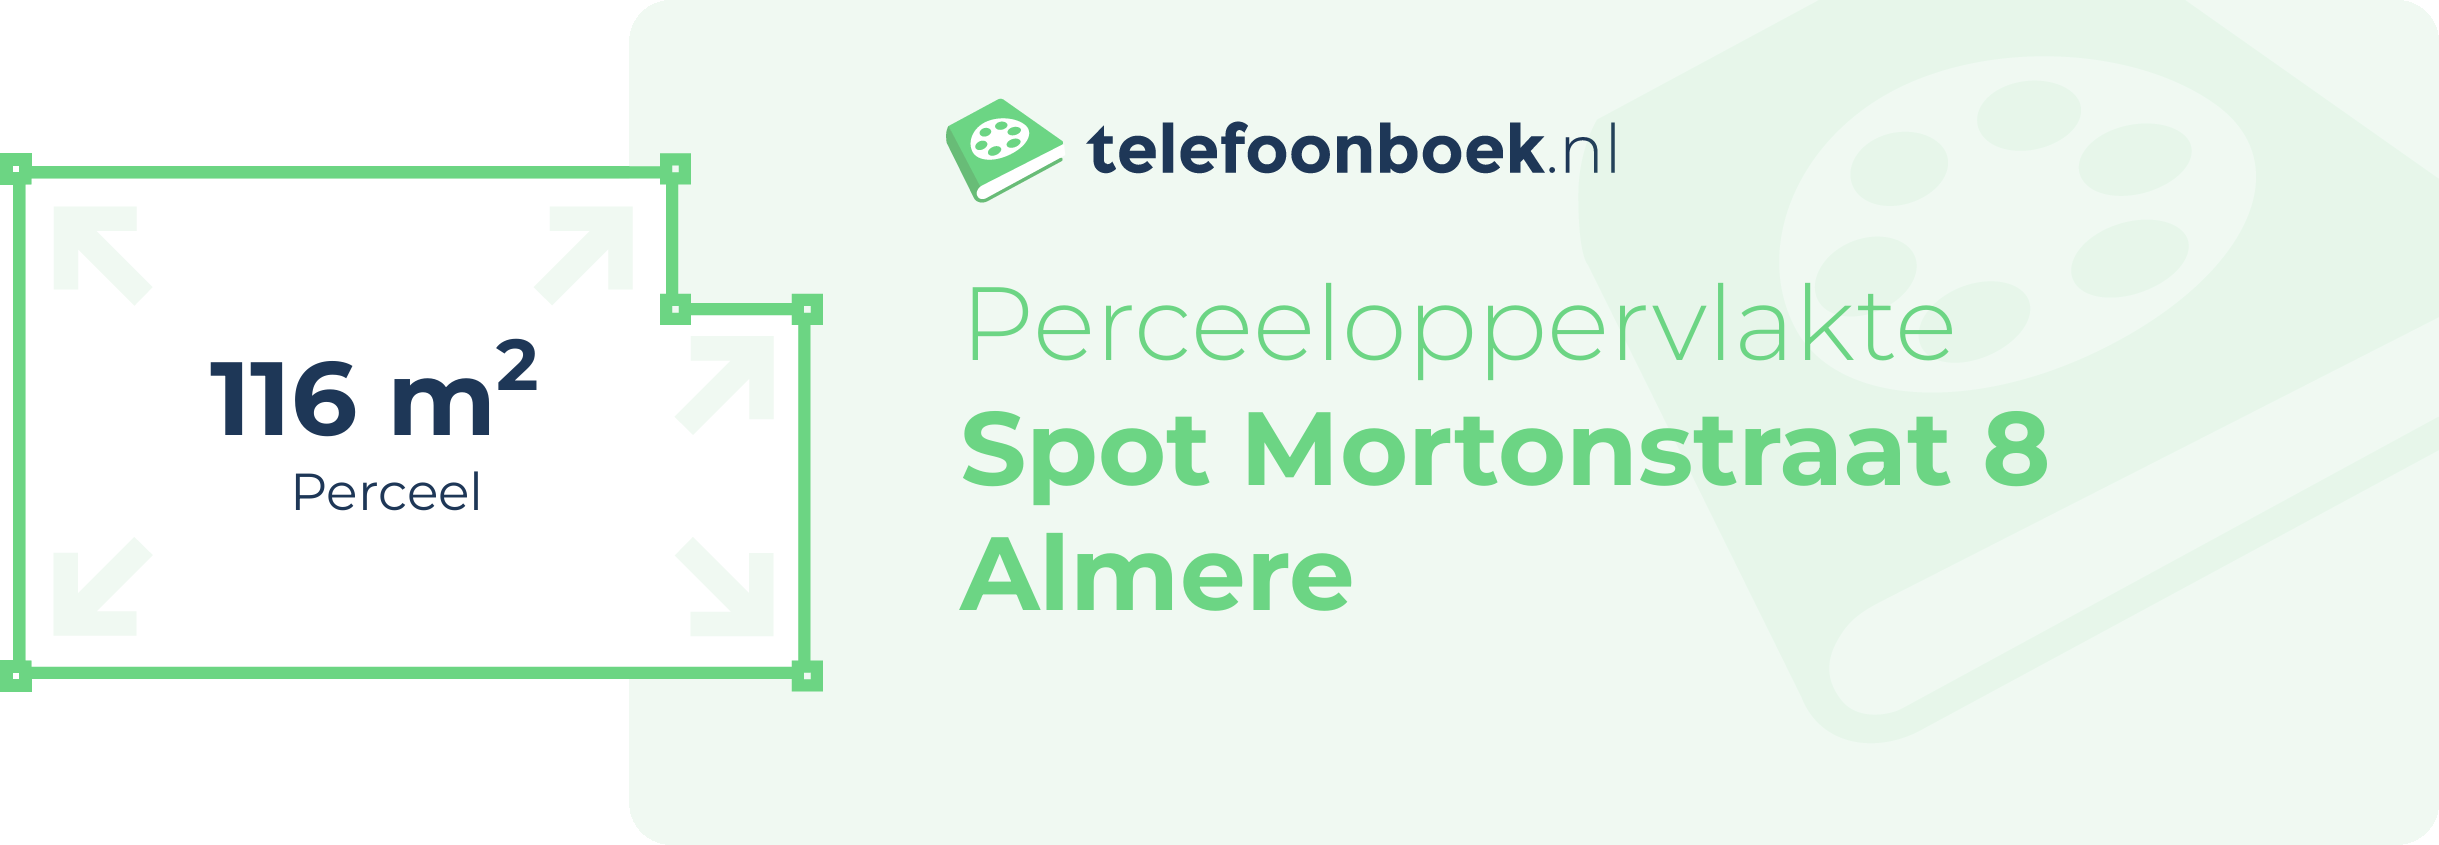 Perceeloppervlakte Spot Mortonstraat 8 Almere